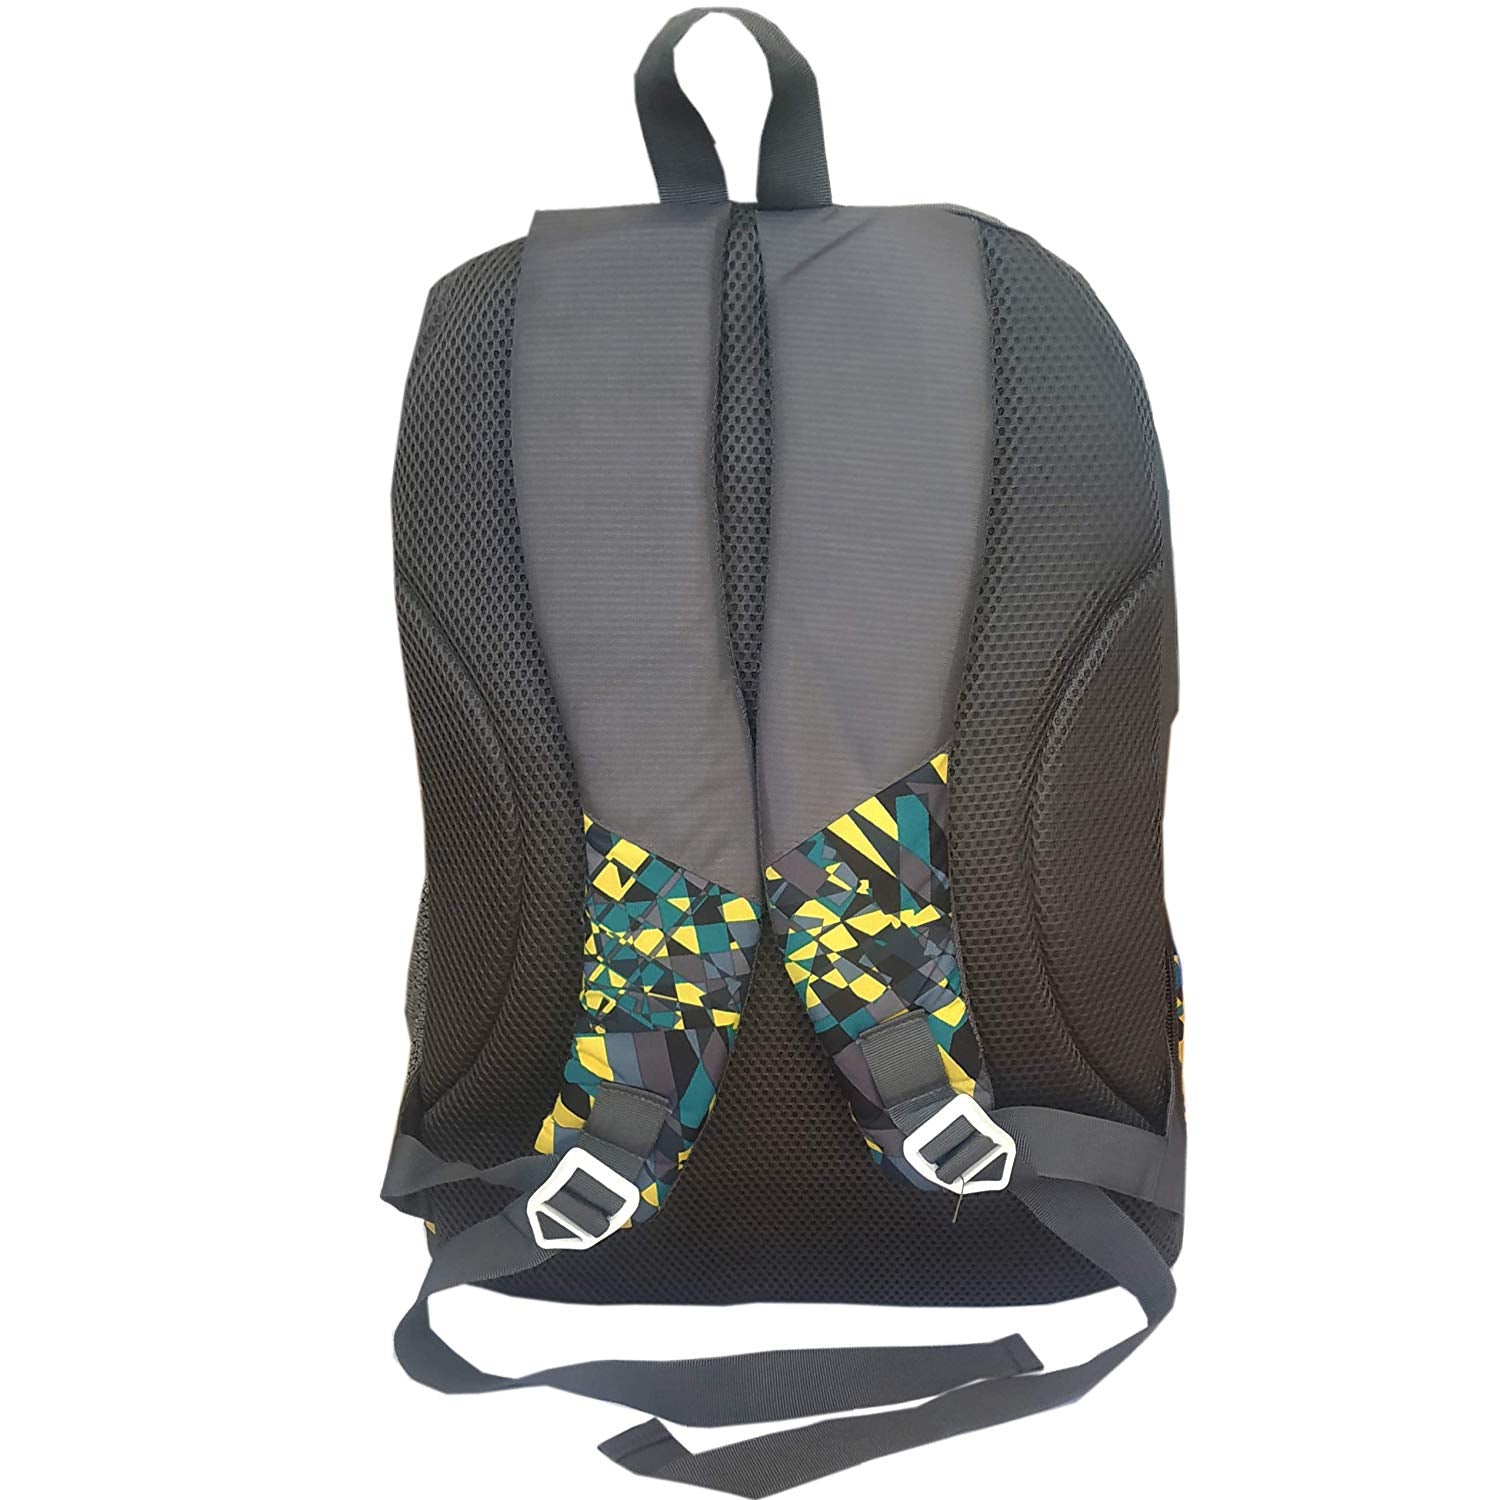 Prokick 30 Ltrs Lite Weight Waterproof Casual Backpack | School Bag, Grey - Best Price online Prokicksports.com